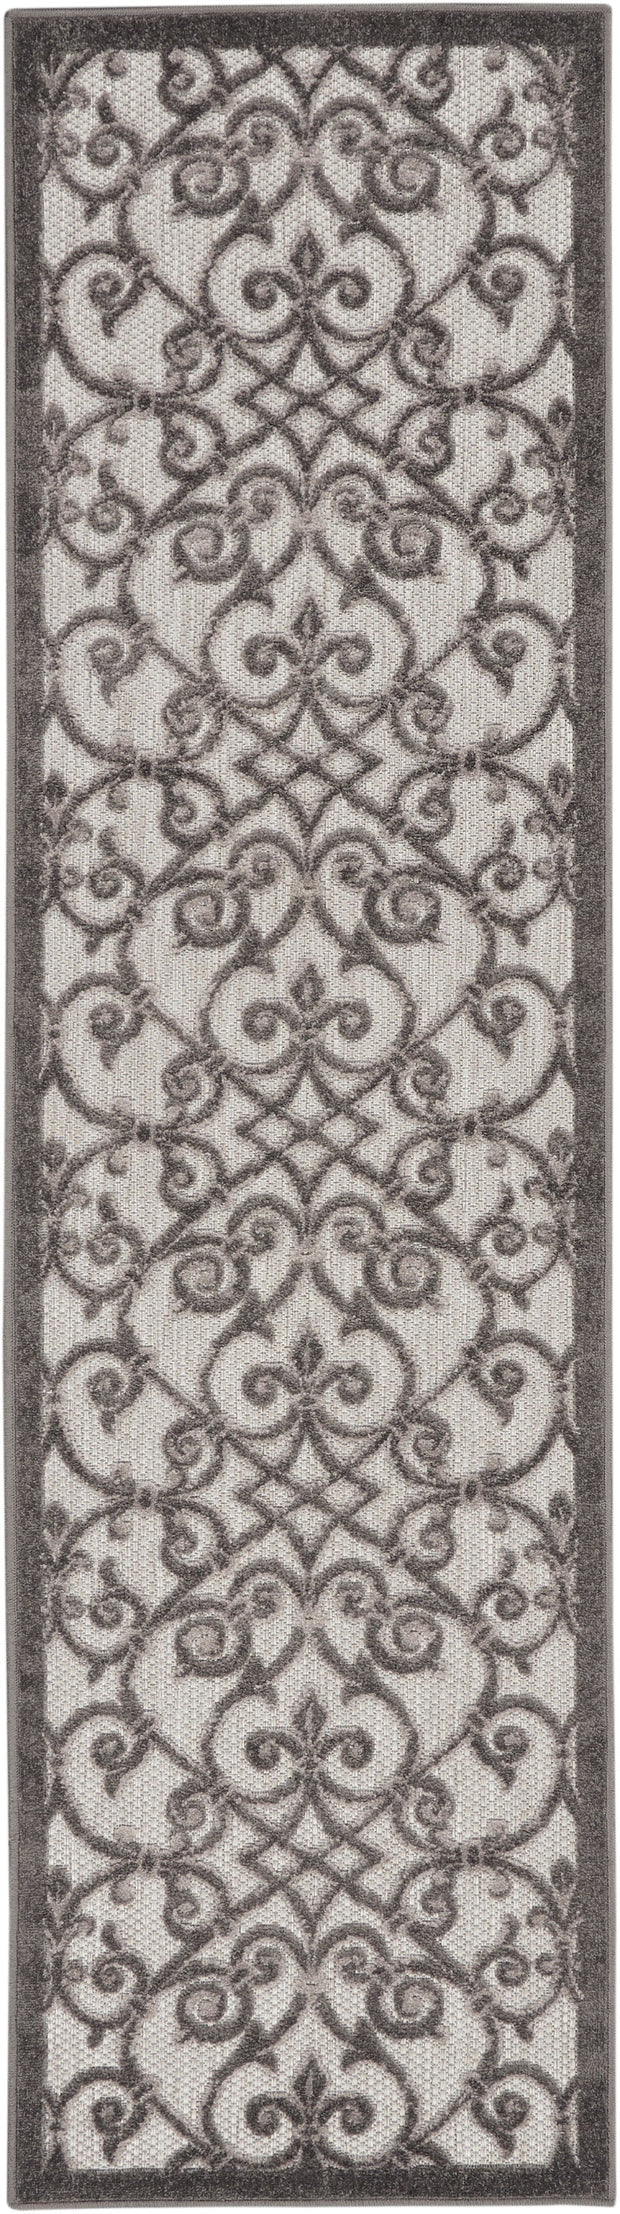 aloha grey charcoal rug by nourison 99446739612 redo 2